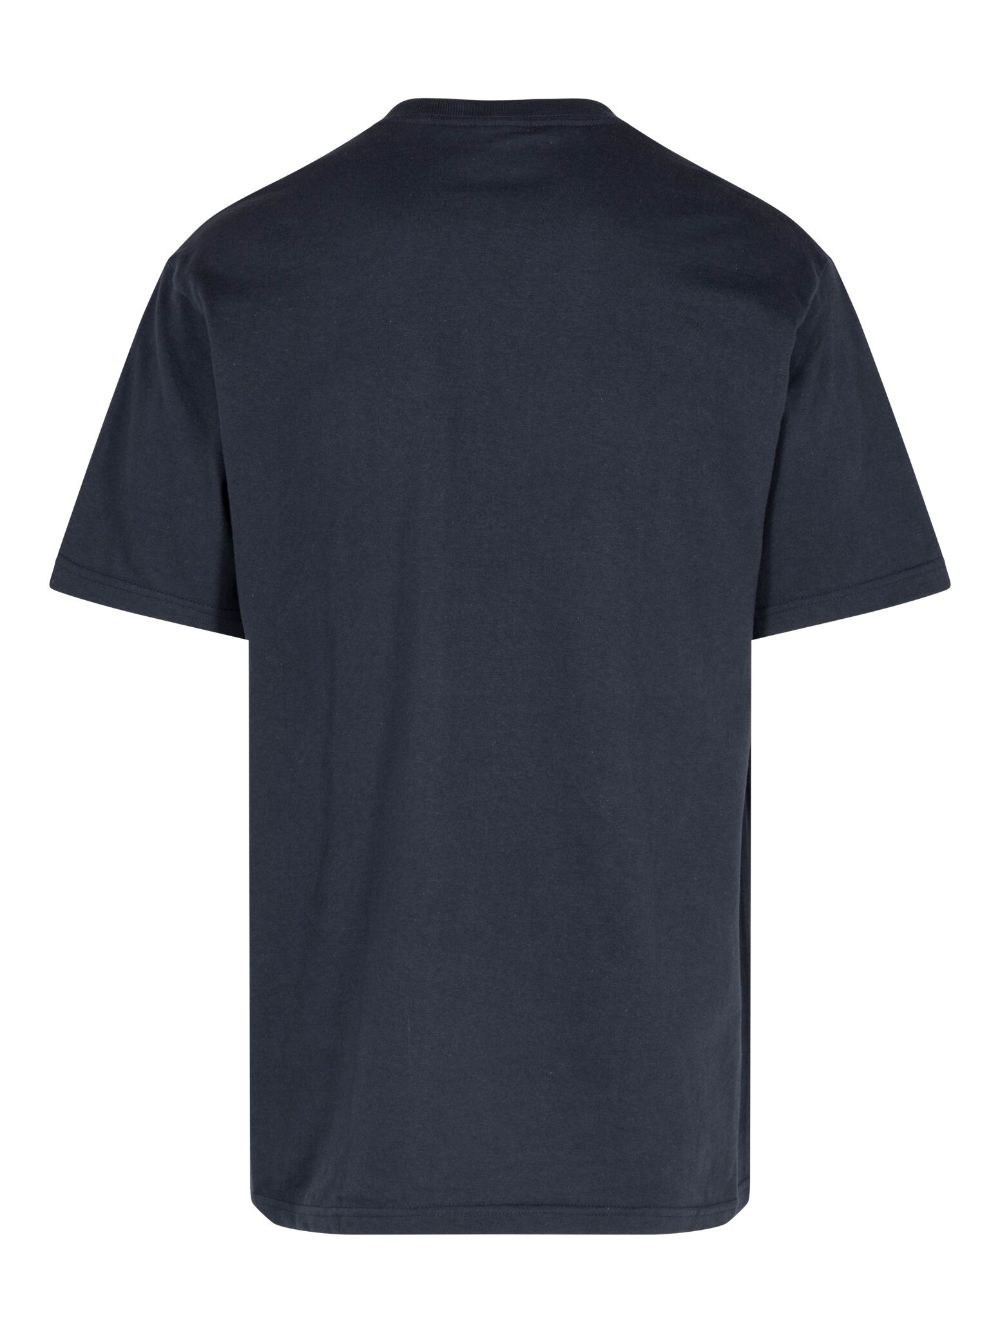 NBA Youngboy cotton T-shirt - 3